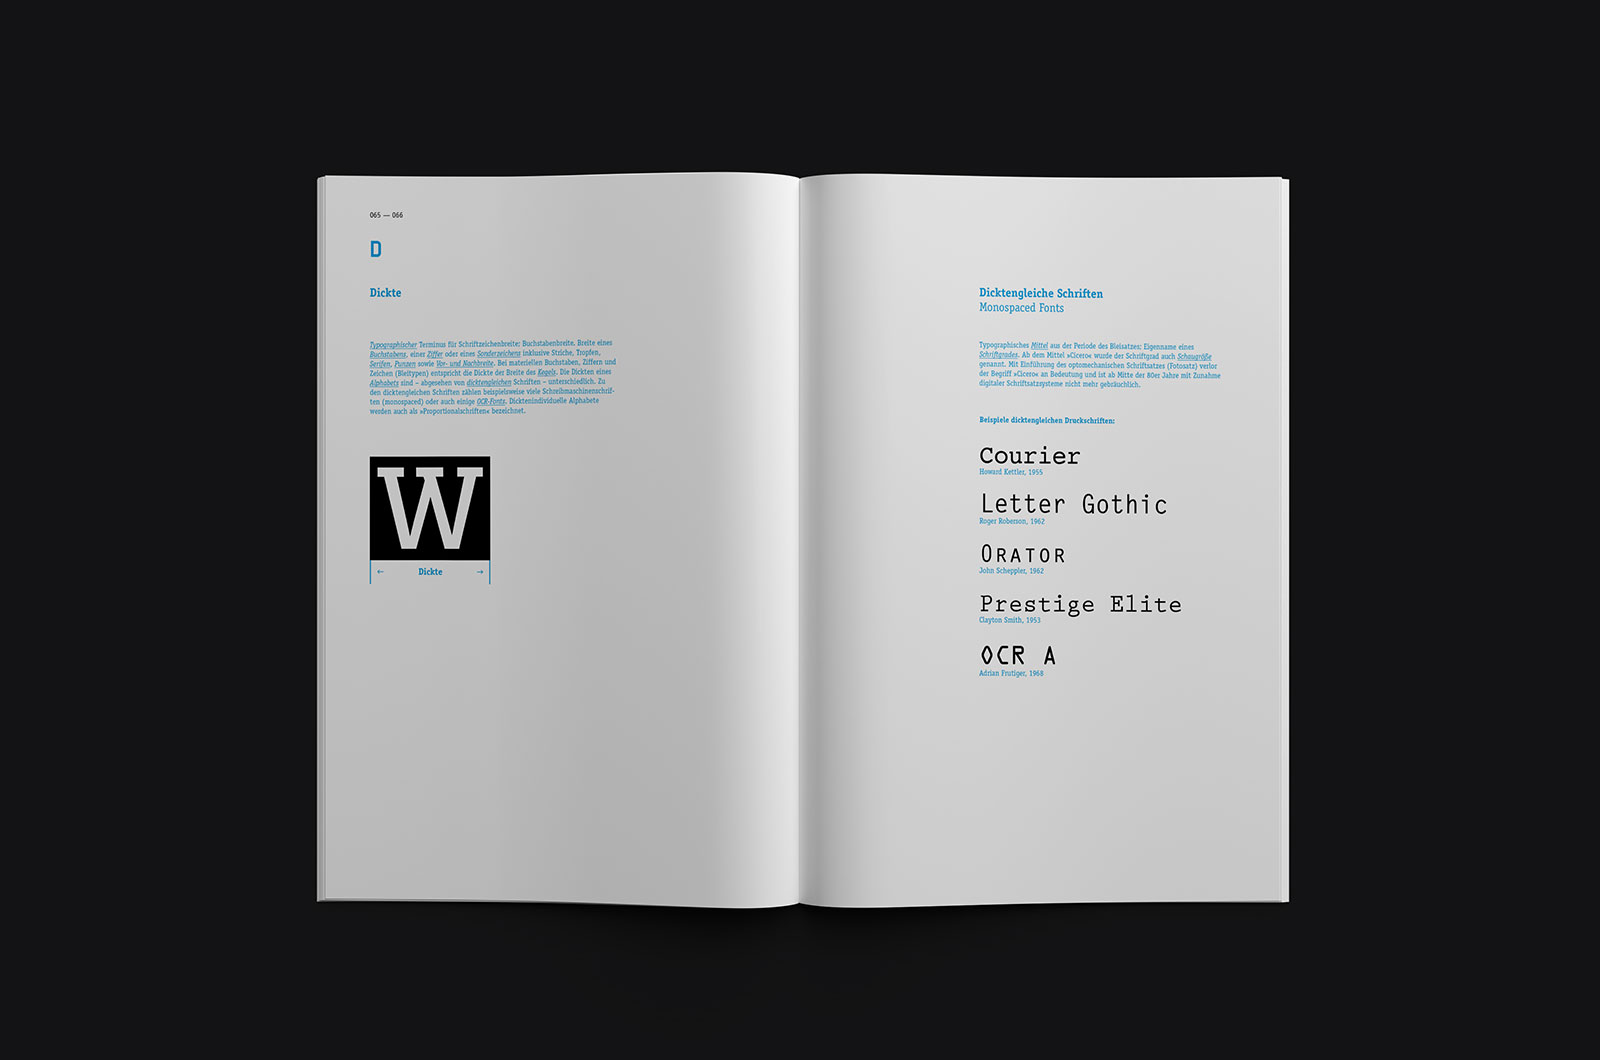 Alexander Glante - Works - Typografie Kompakt - 04